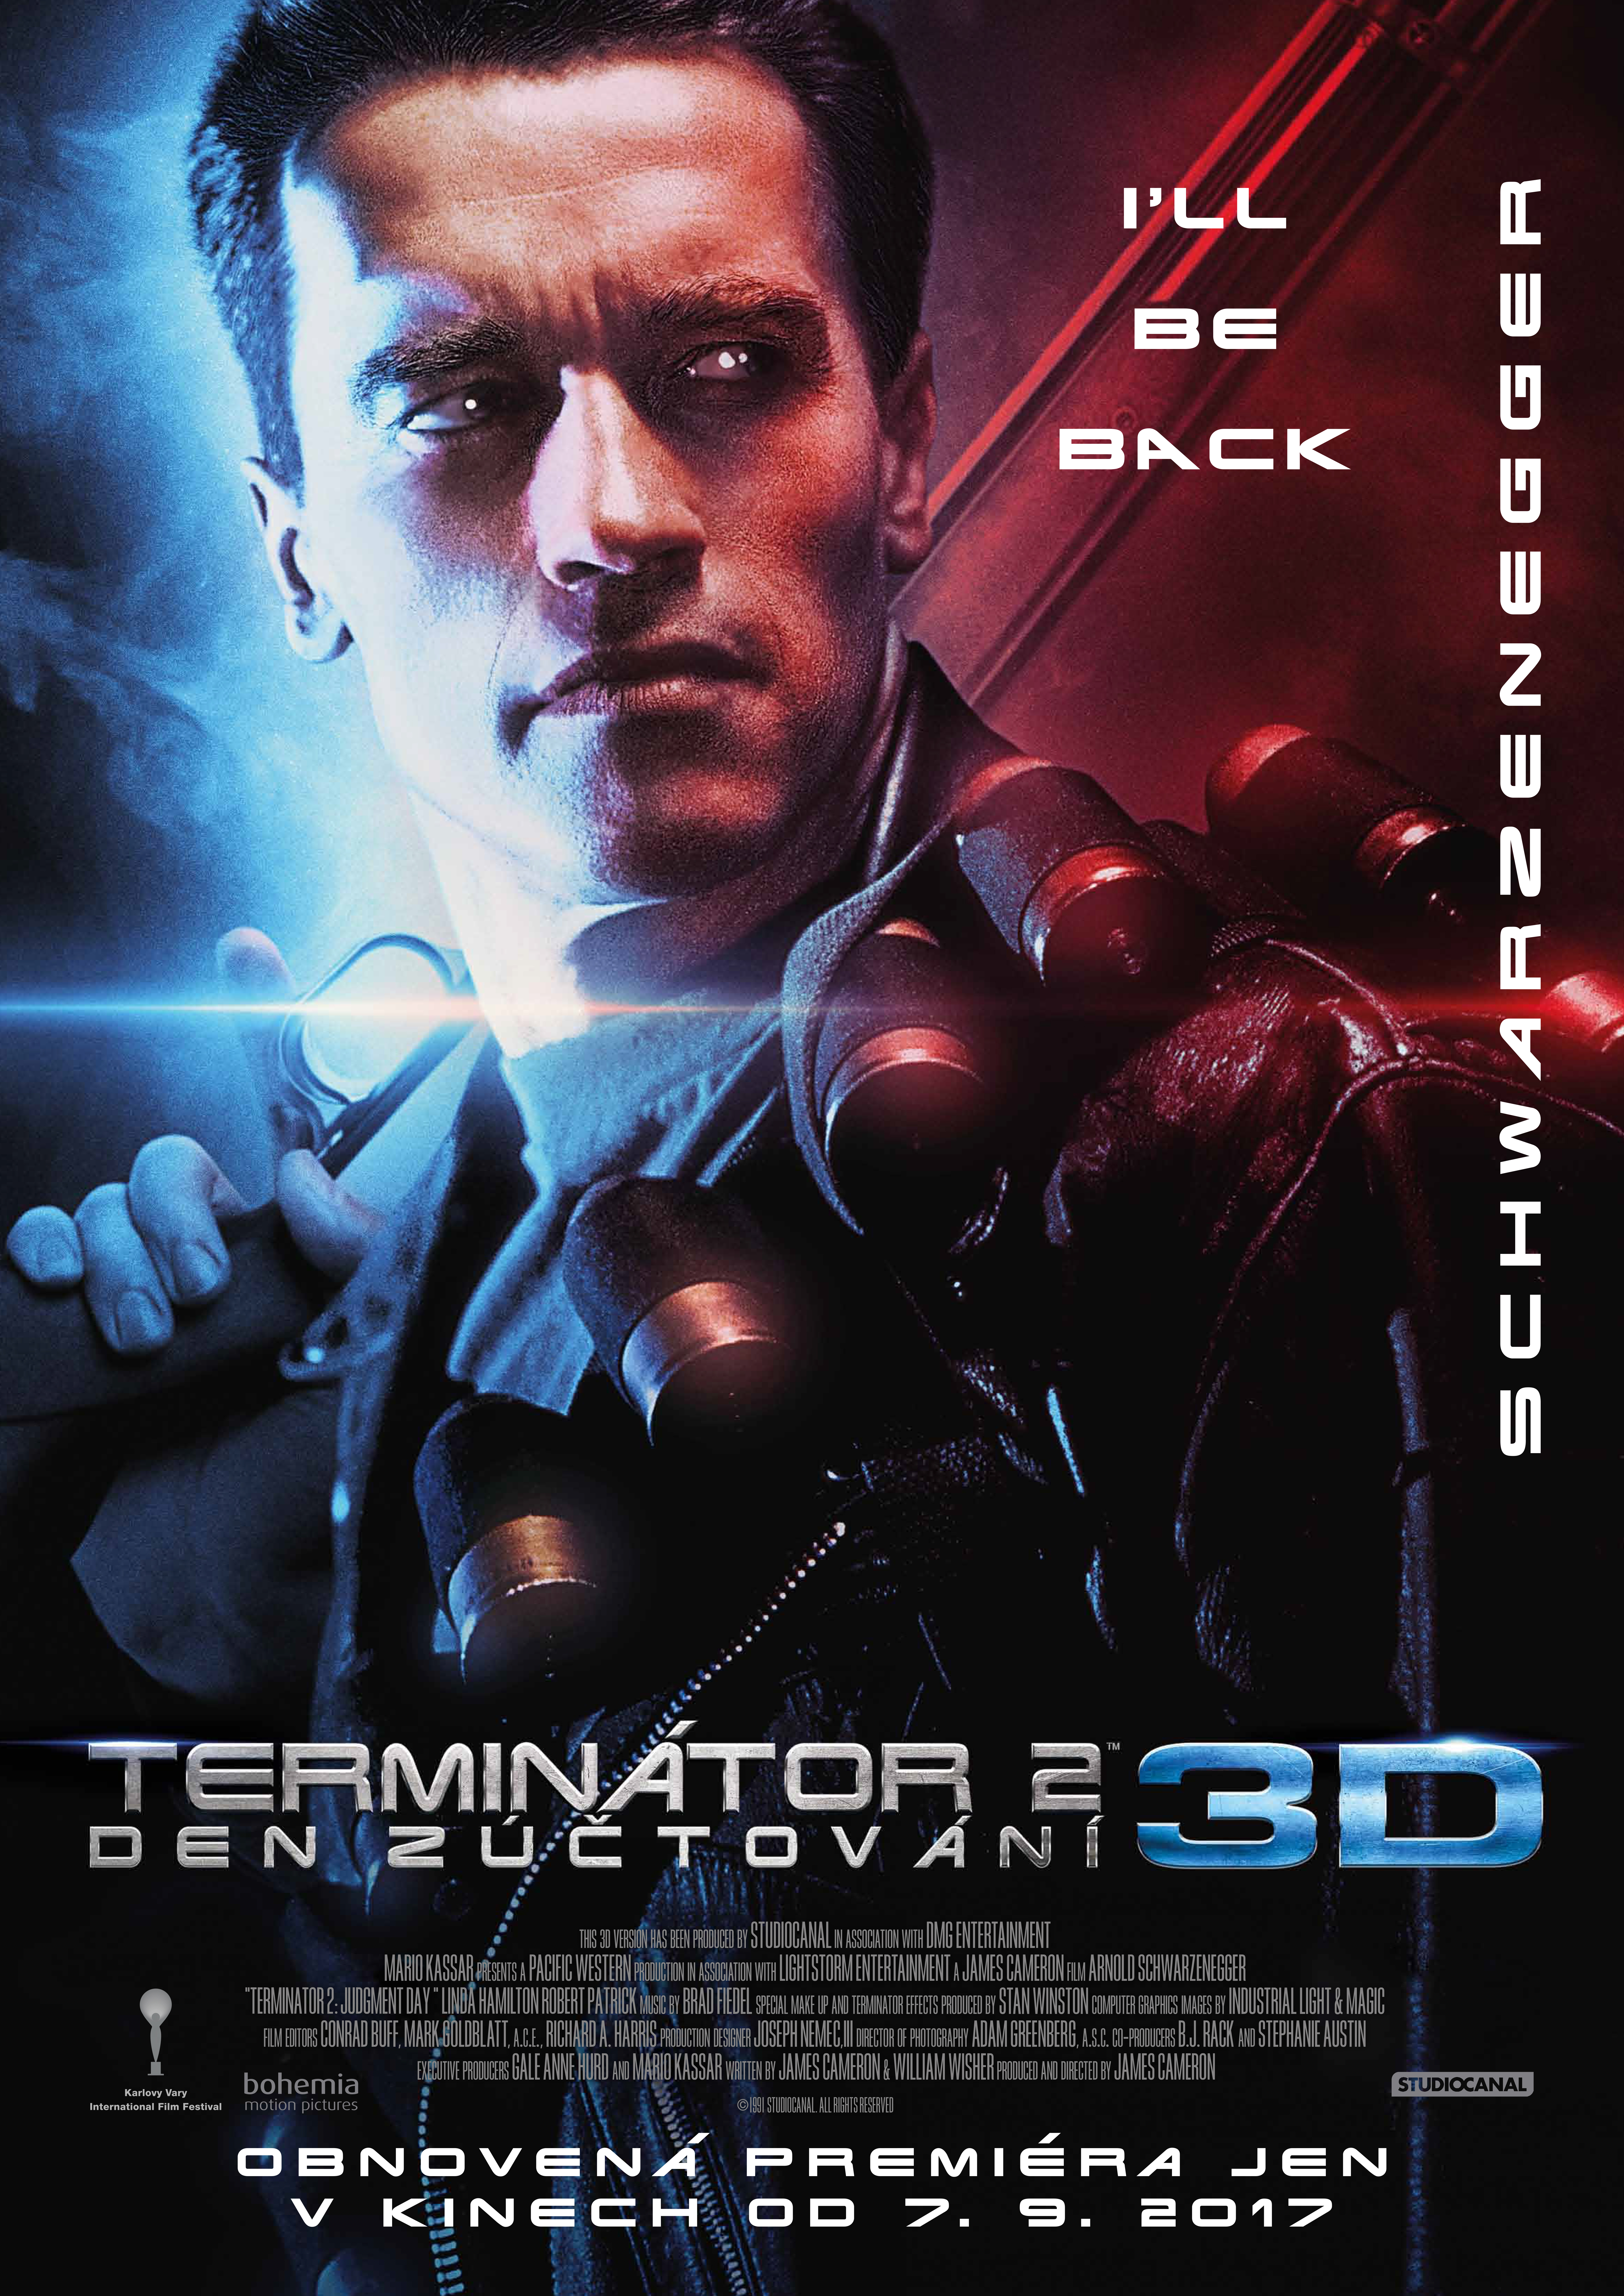 Re: Terminátor 2 / Terminator 2: Judgment Day (1991) Remaste